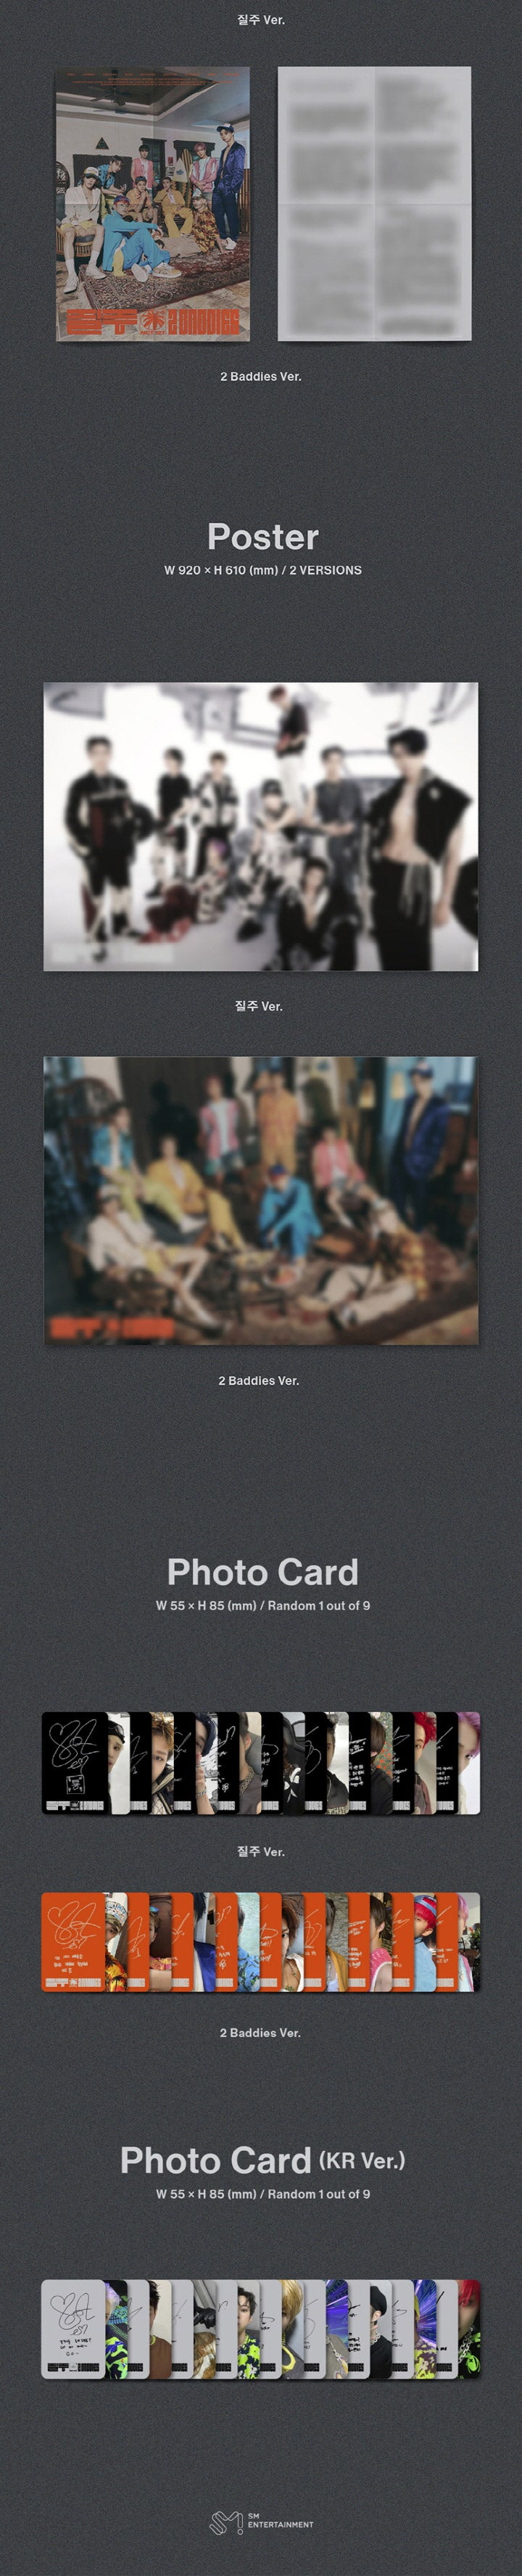 [SALE] NCT 127 ALBUM - 2 BADDIES (PHOTOBOOK VER.)